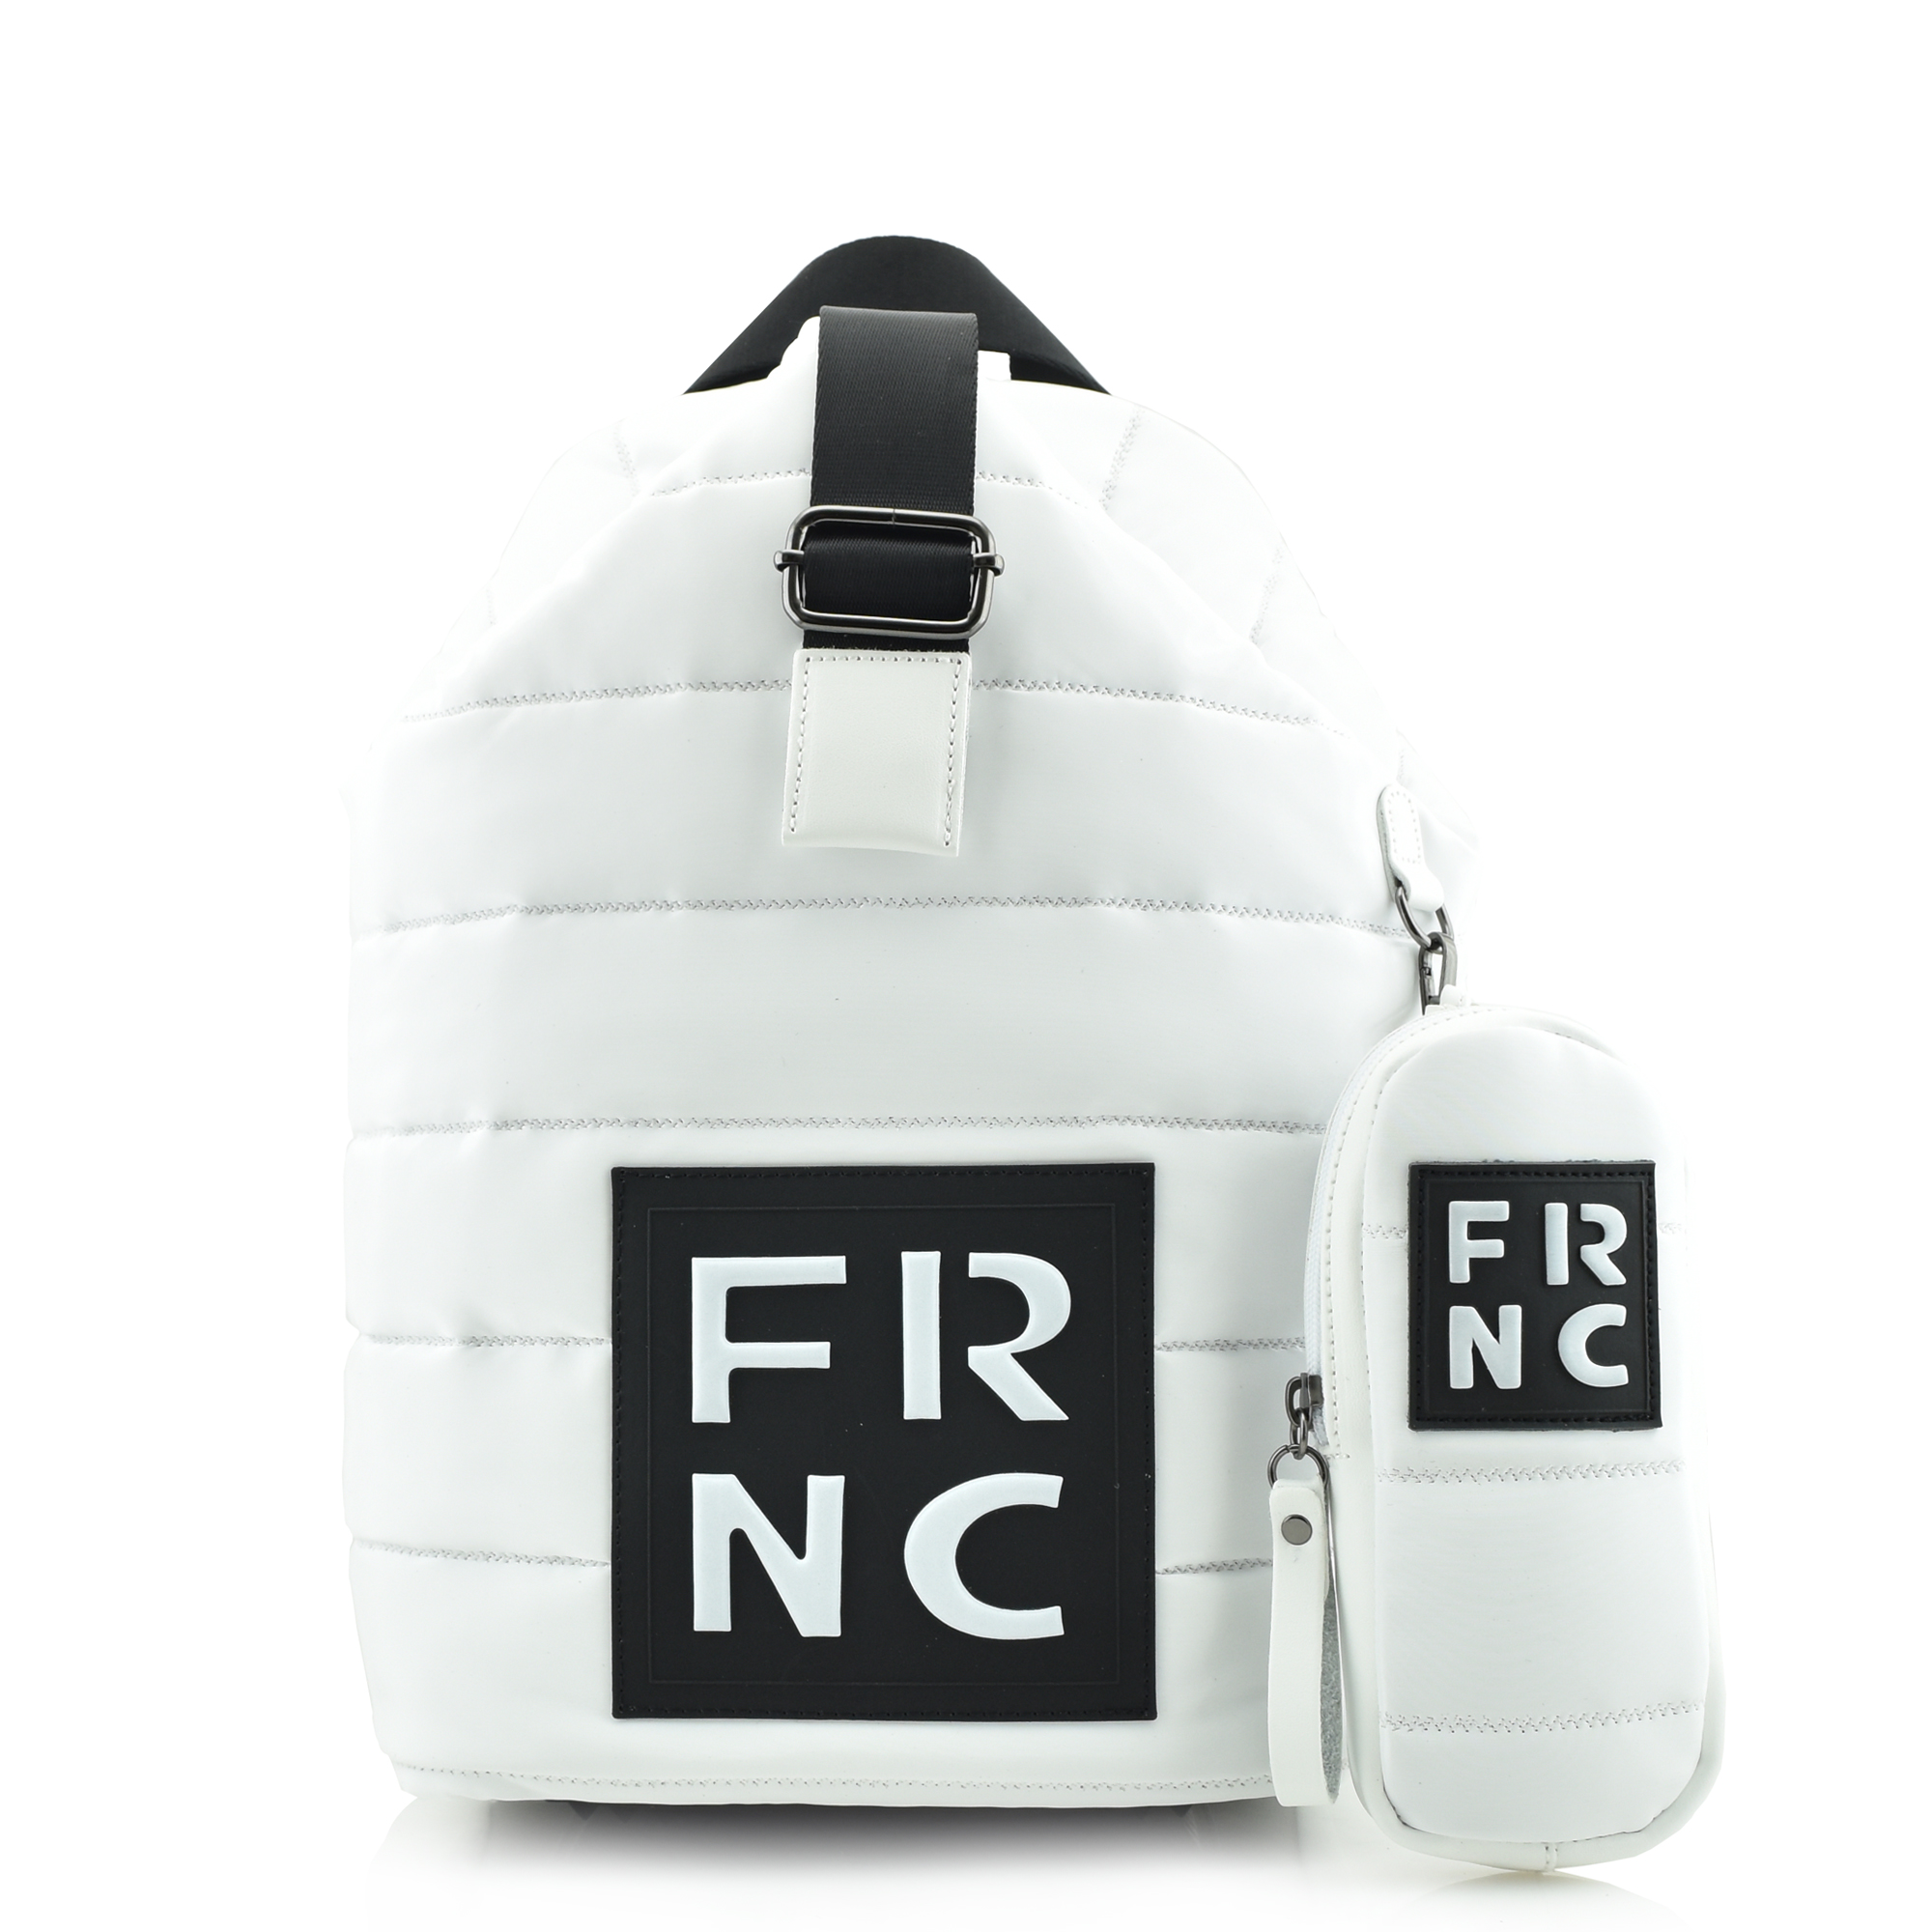 FRNC - FRANCESCO POUCH SHINY BACKPACK - 2301 WHITE